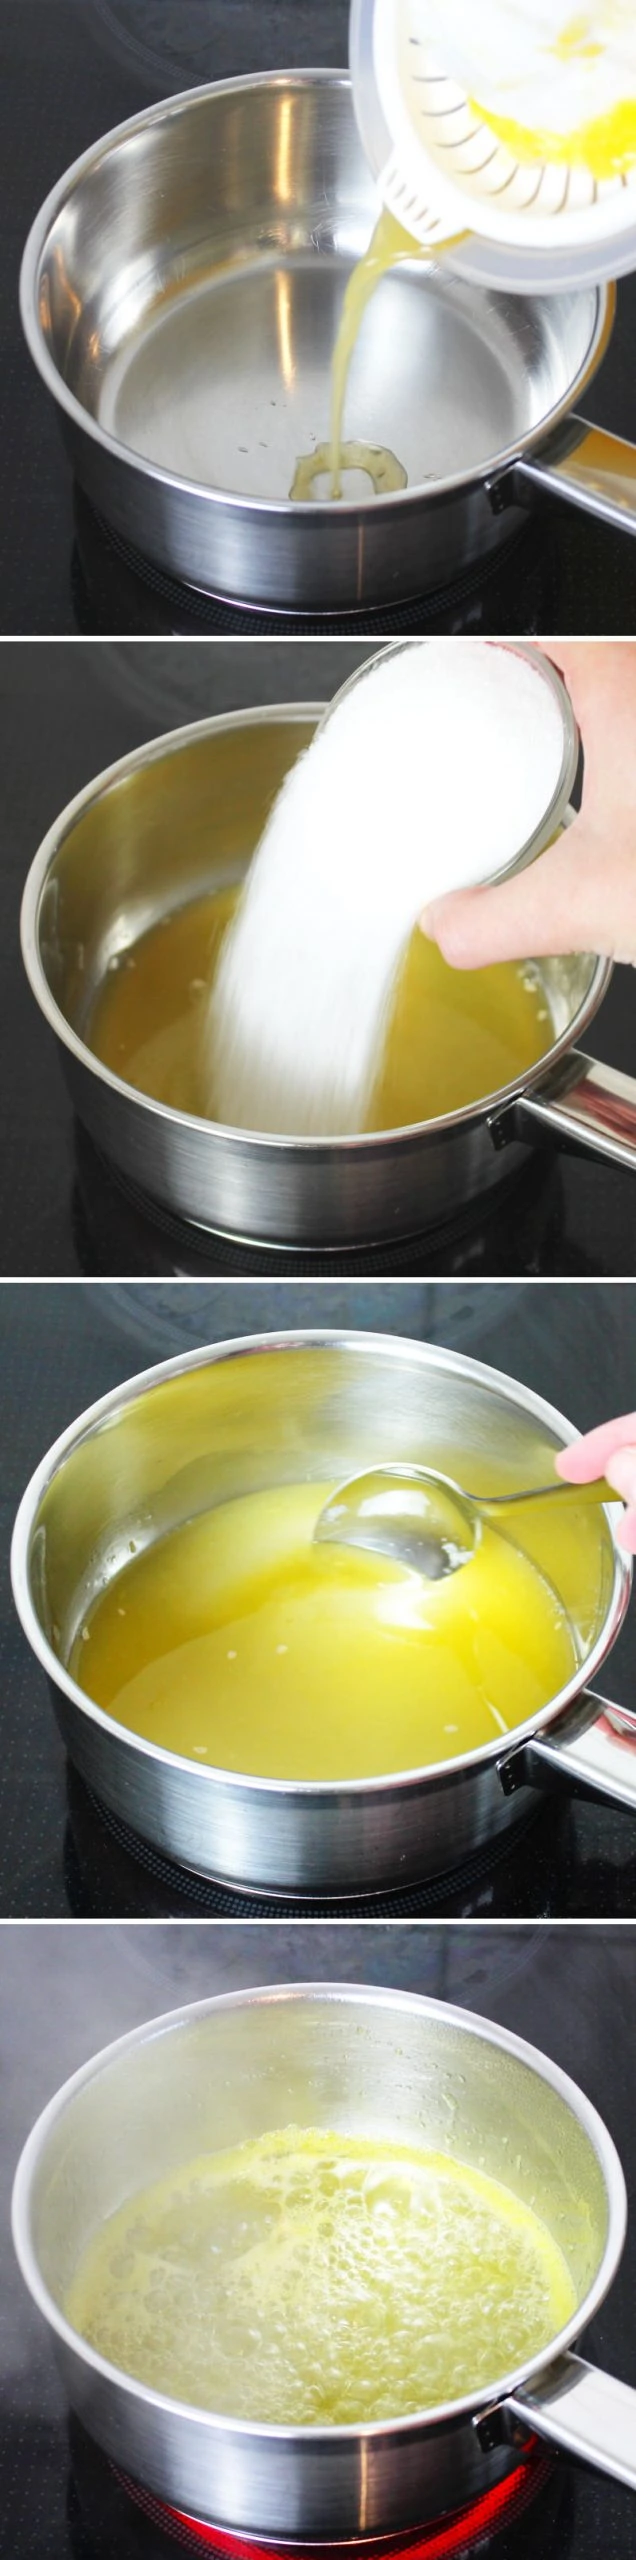 Dango Obstsalat mit Orangensirup Schritt 3 Sirup kochen